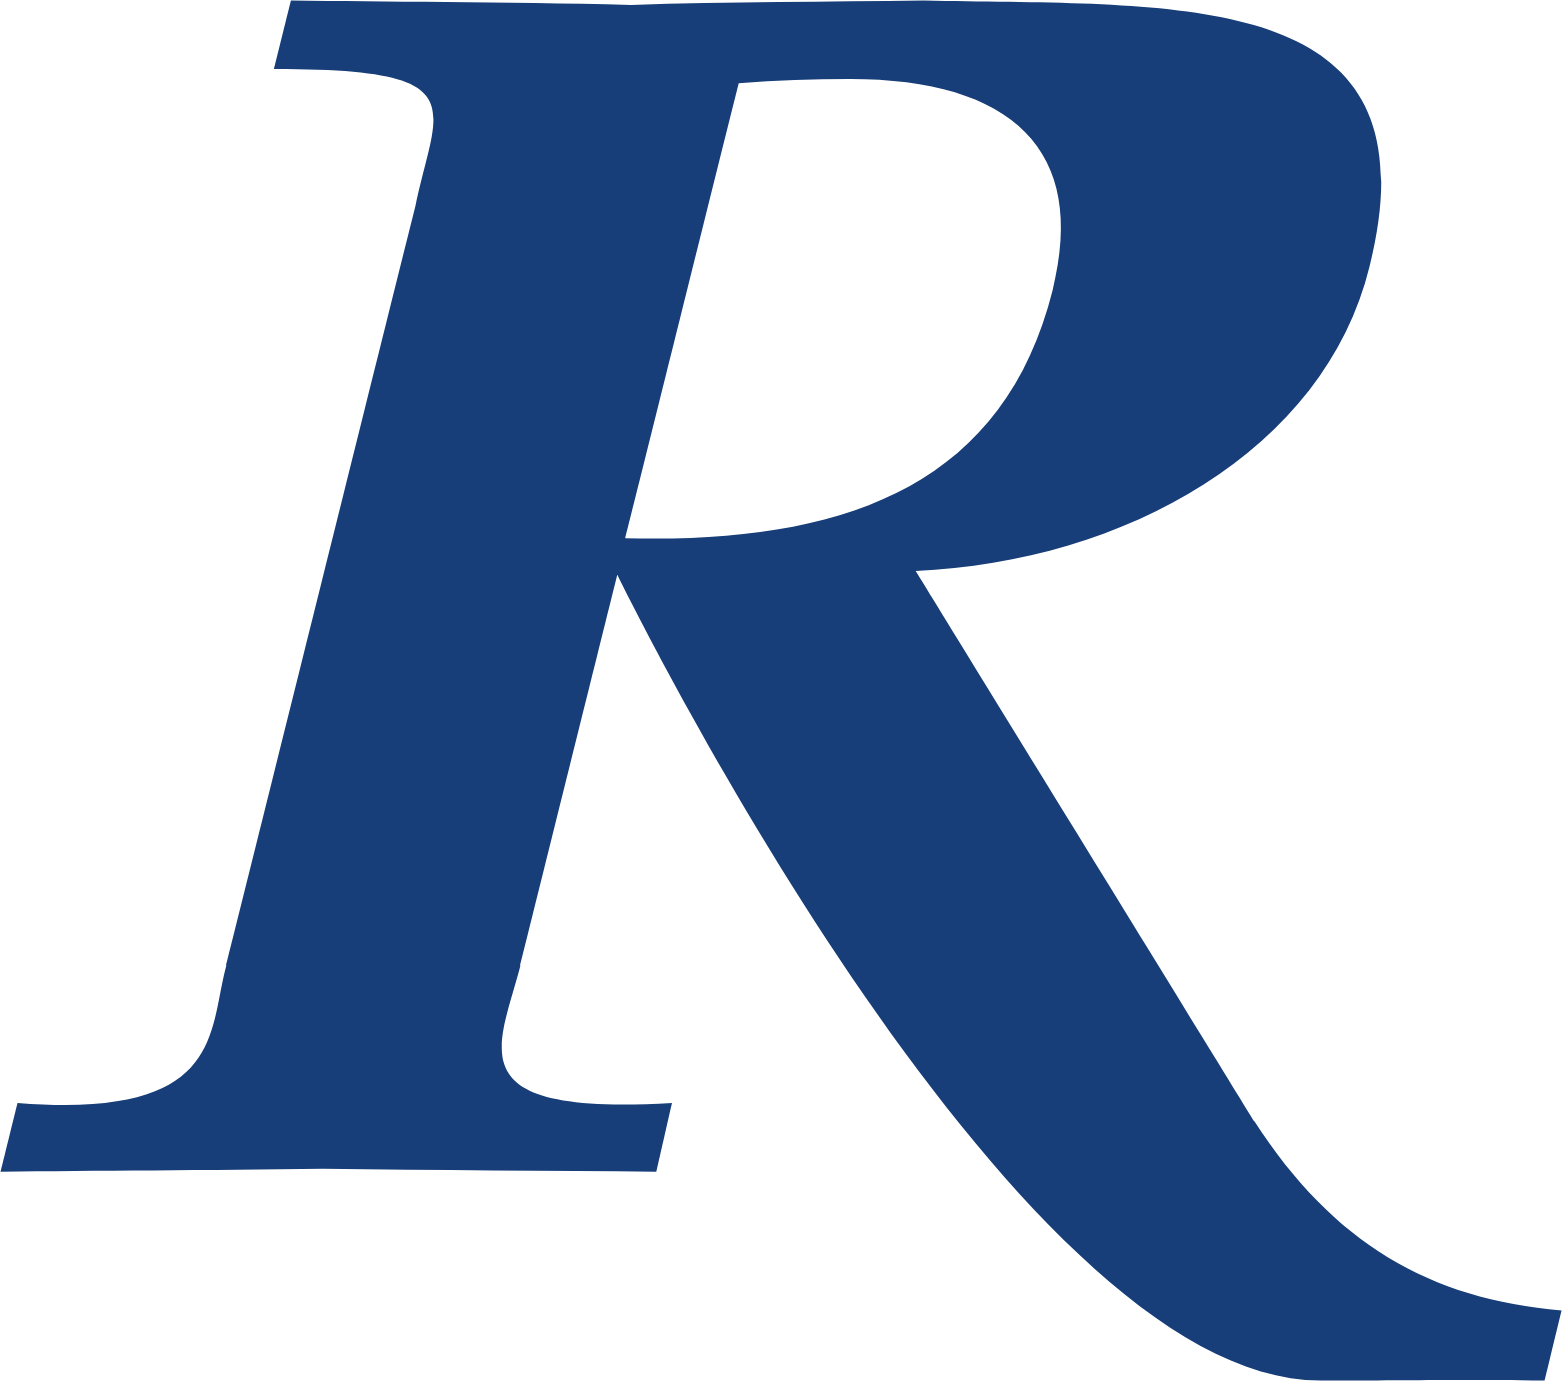 Remgro Limited logo (PNG transparent)